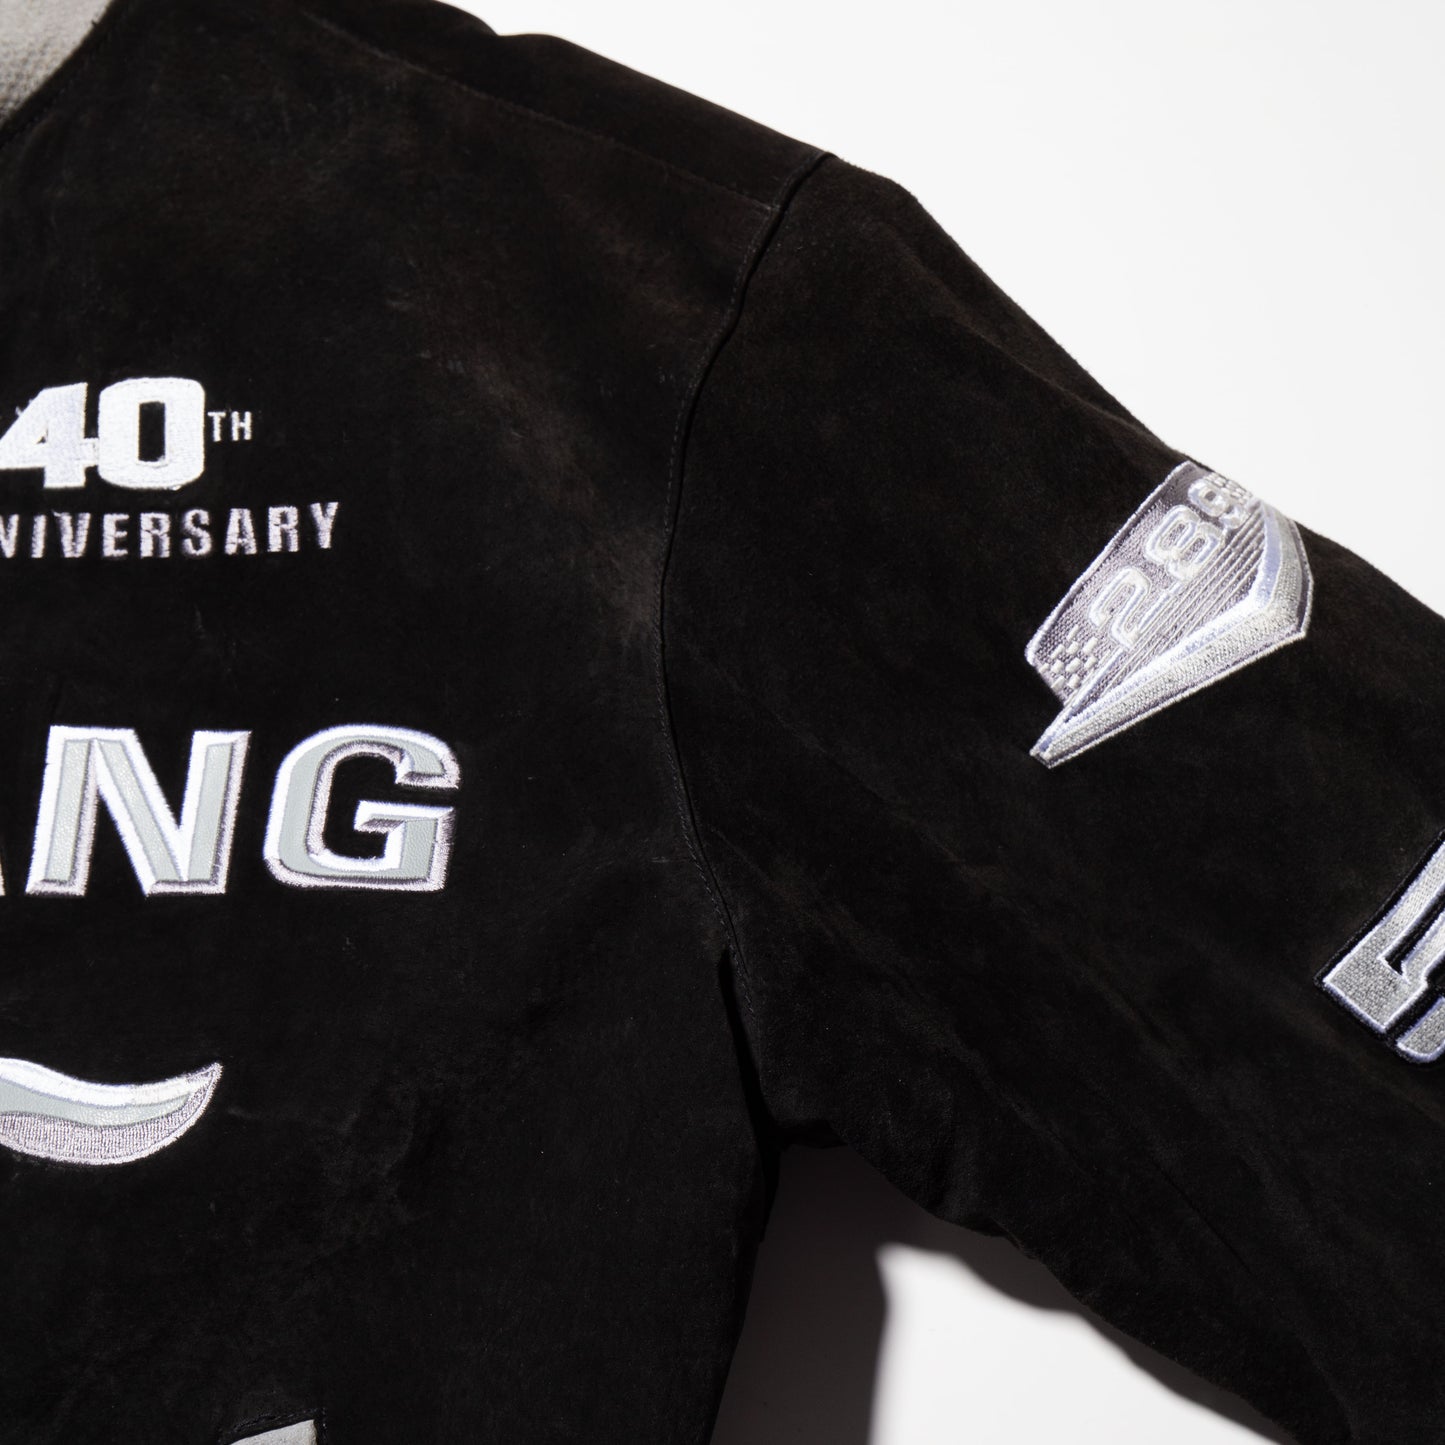 vintage Jeff Hamilton mustang suede leather racing jacket